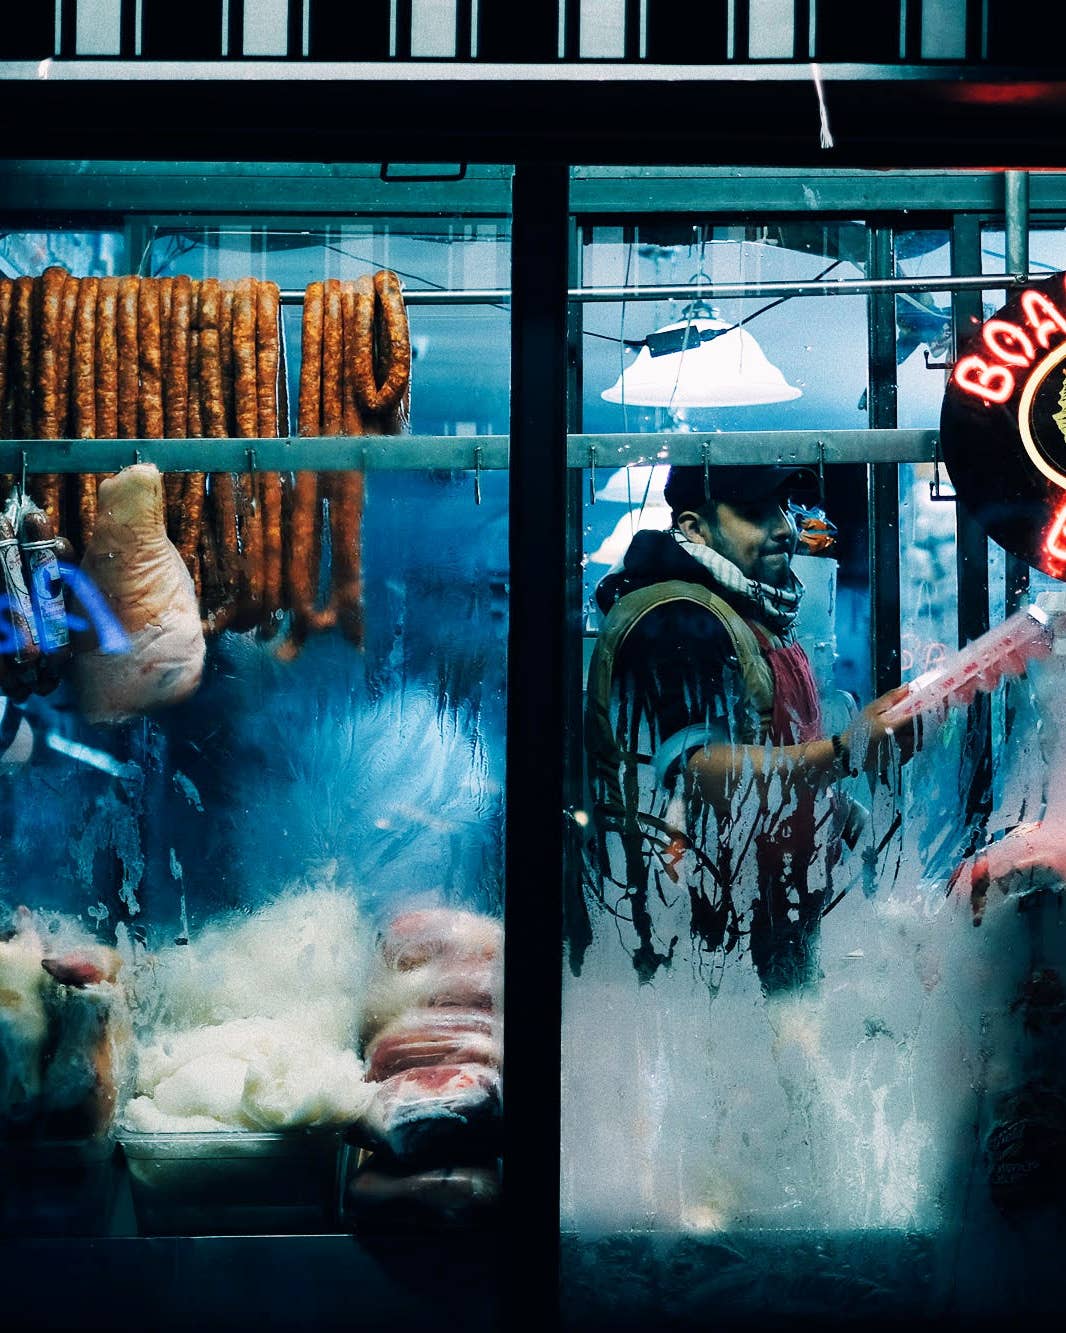 NYC Meat Vendor After Dark